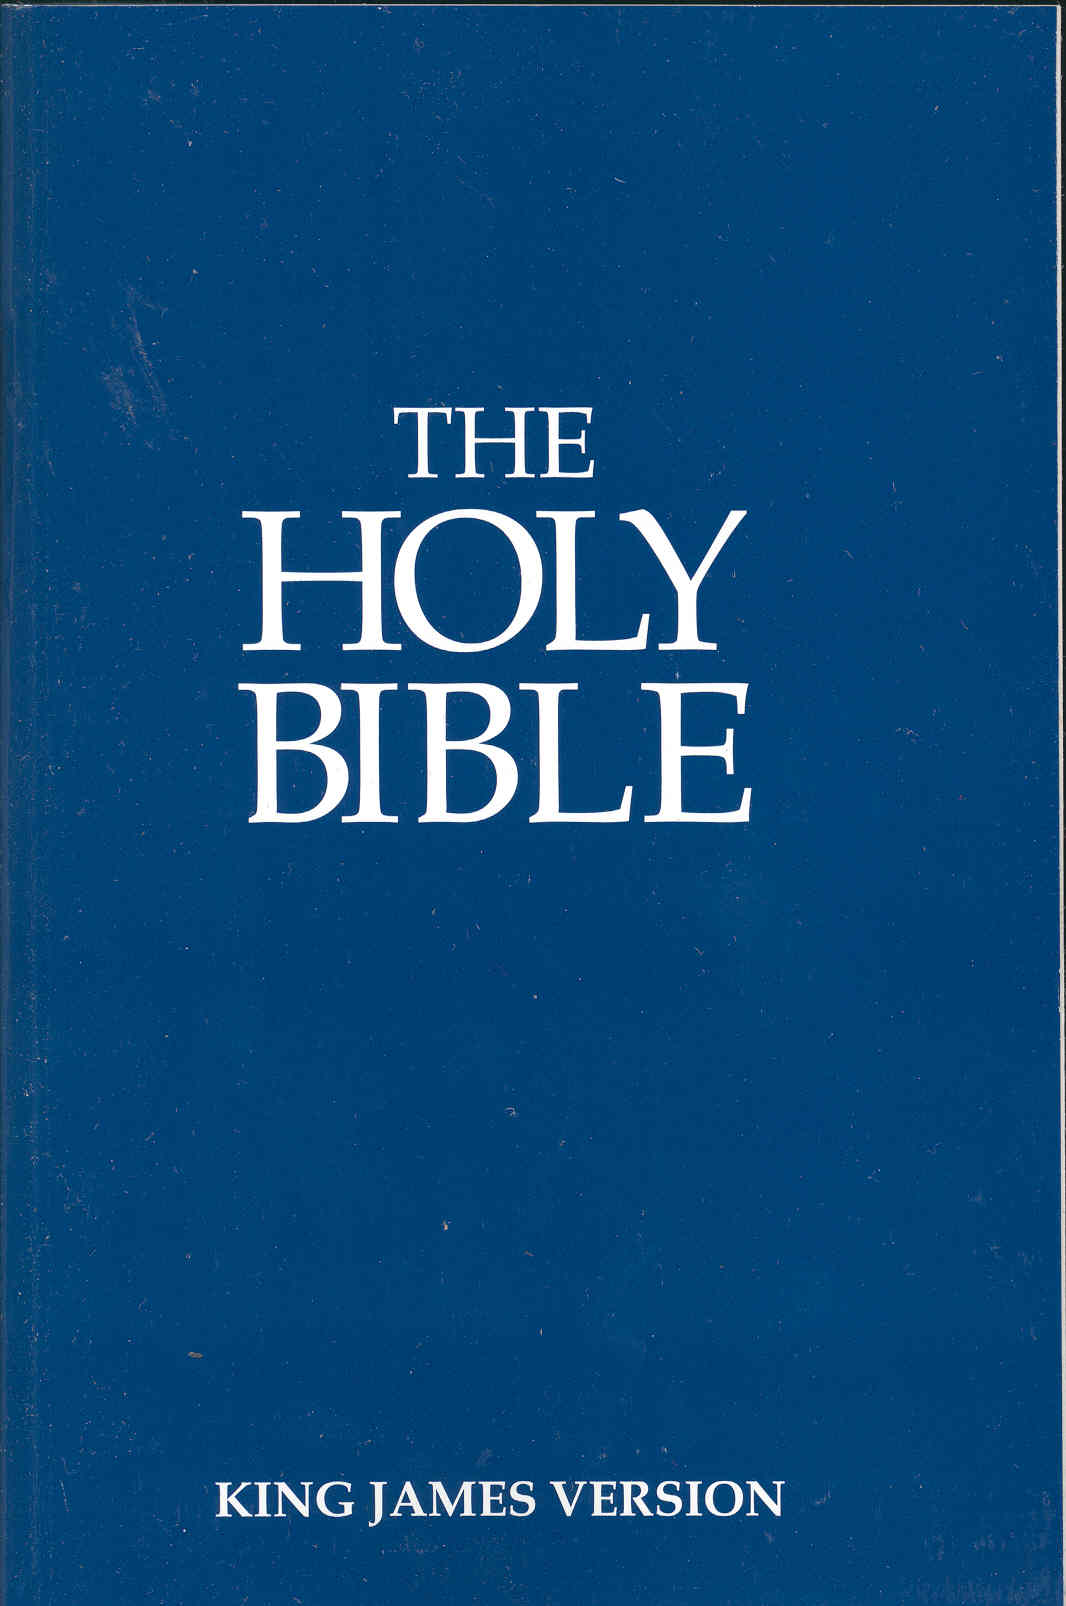 KJV paperback Bible